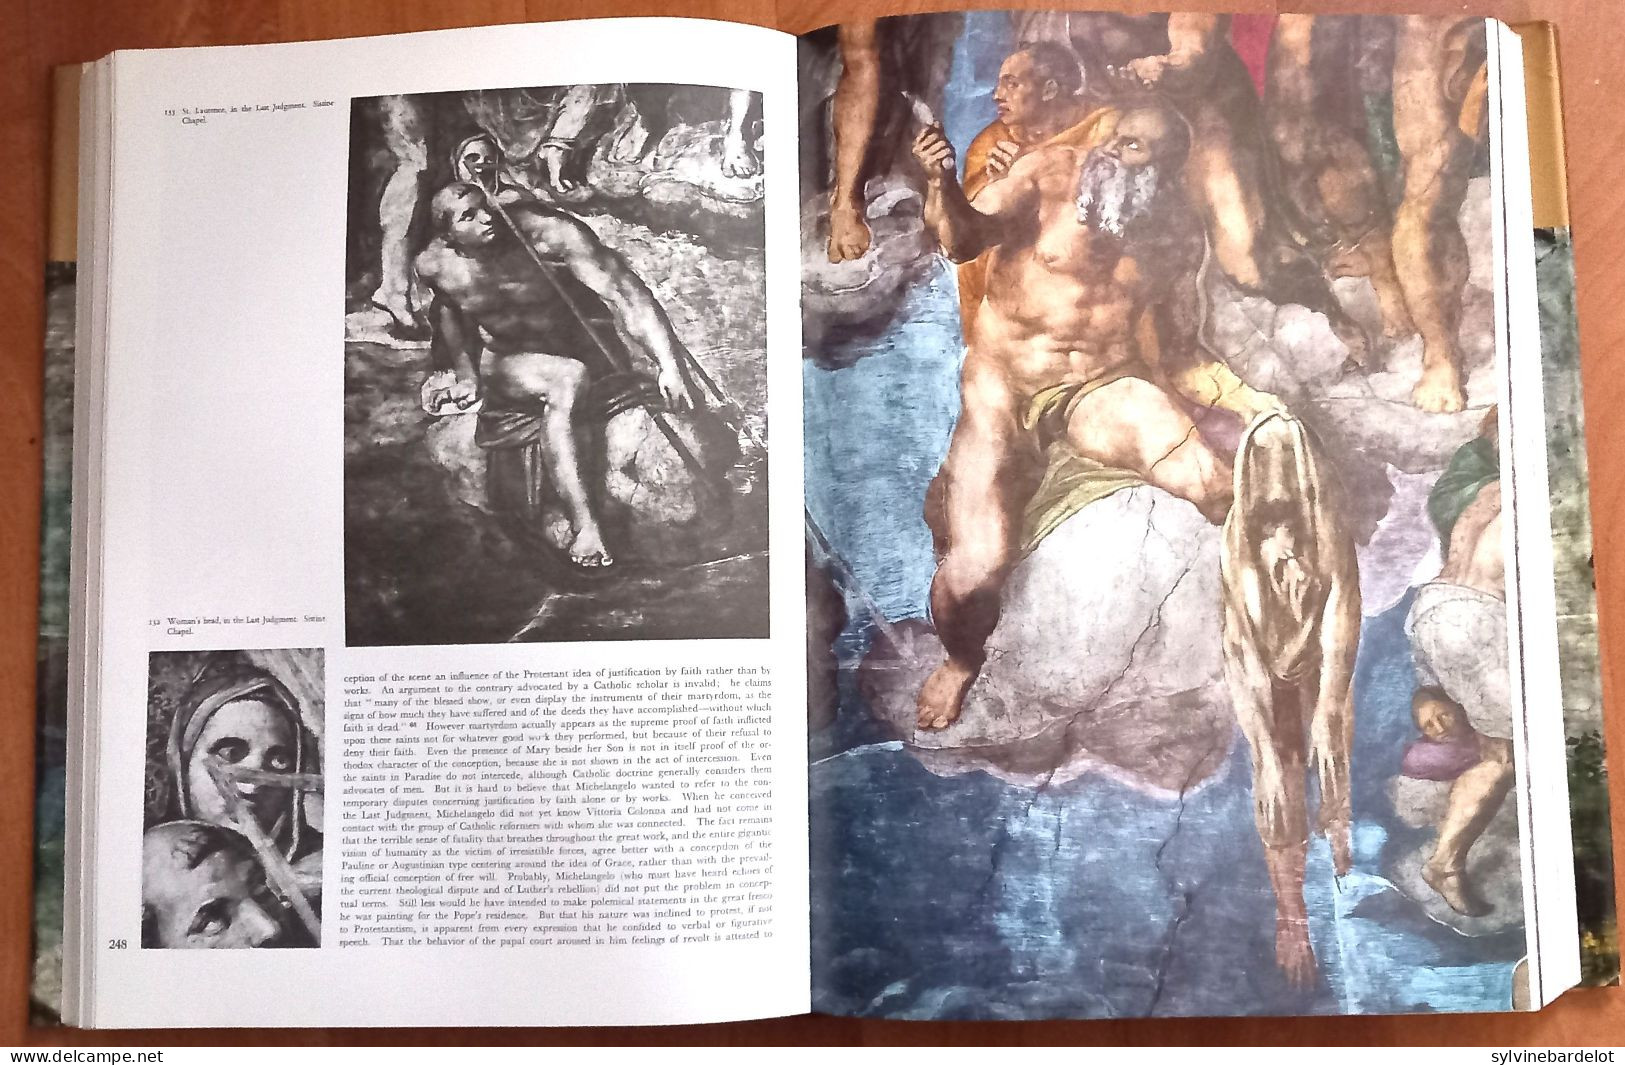 The Complete Work Of Michelangelo  - Mario Salmi, Charles De Tolnay, Umberto Baldini   & Roberto Salvini, - Beaux-Arts